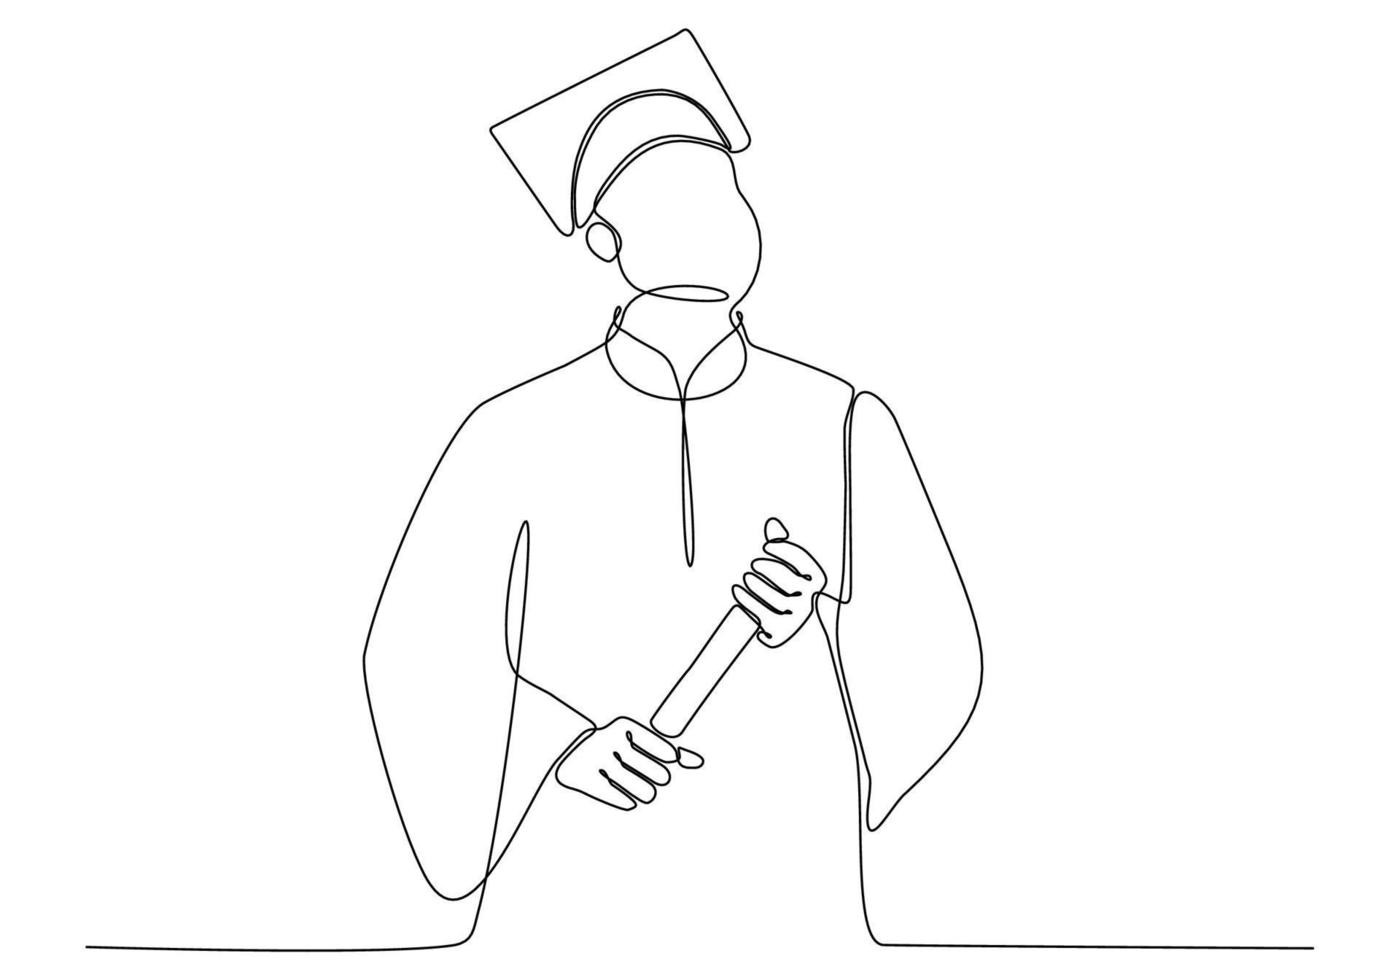 estudiante masculino una línea continua dibujada silueta dibujada a mano. arte lineal. estudiante graduado vector